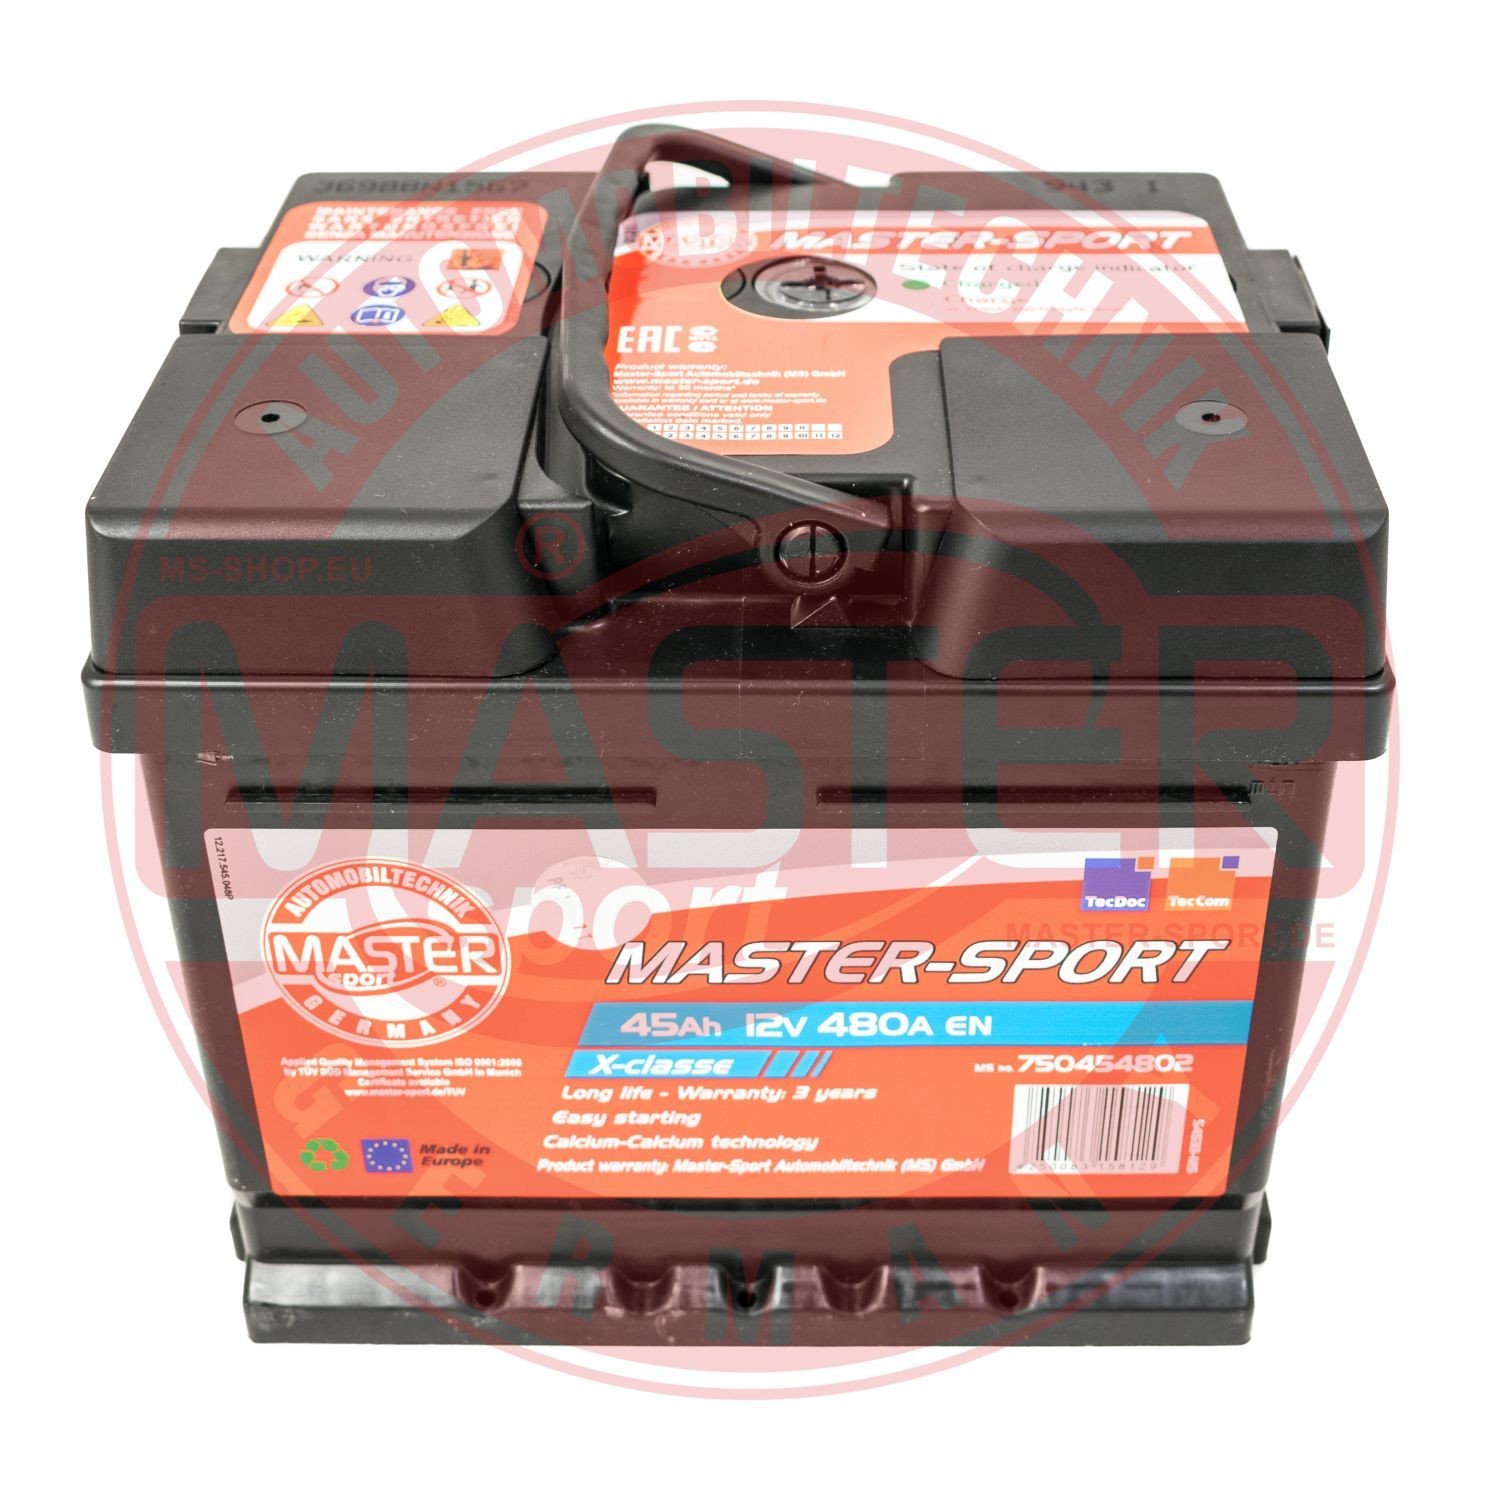 MASTER-SPORT BV750454802 Auto battery 12V 45Ah 480A B13 L1 Lead-acid battery